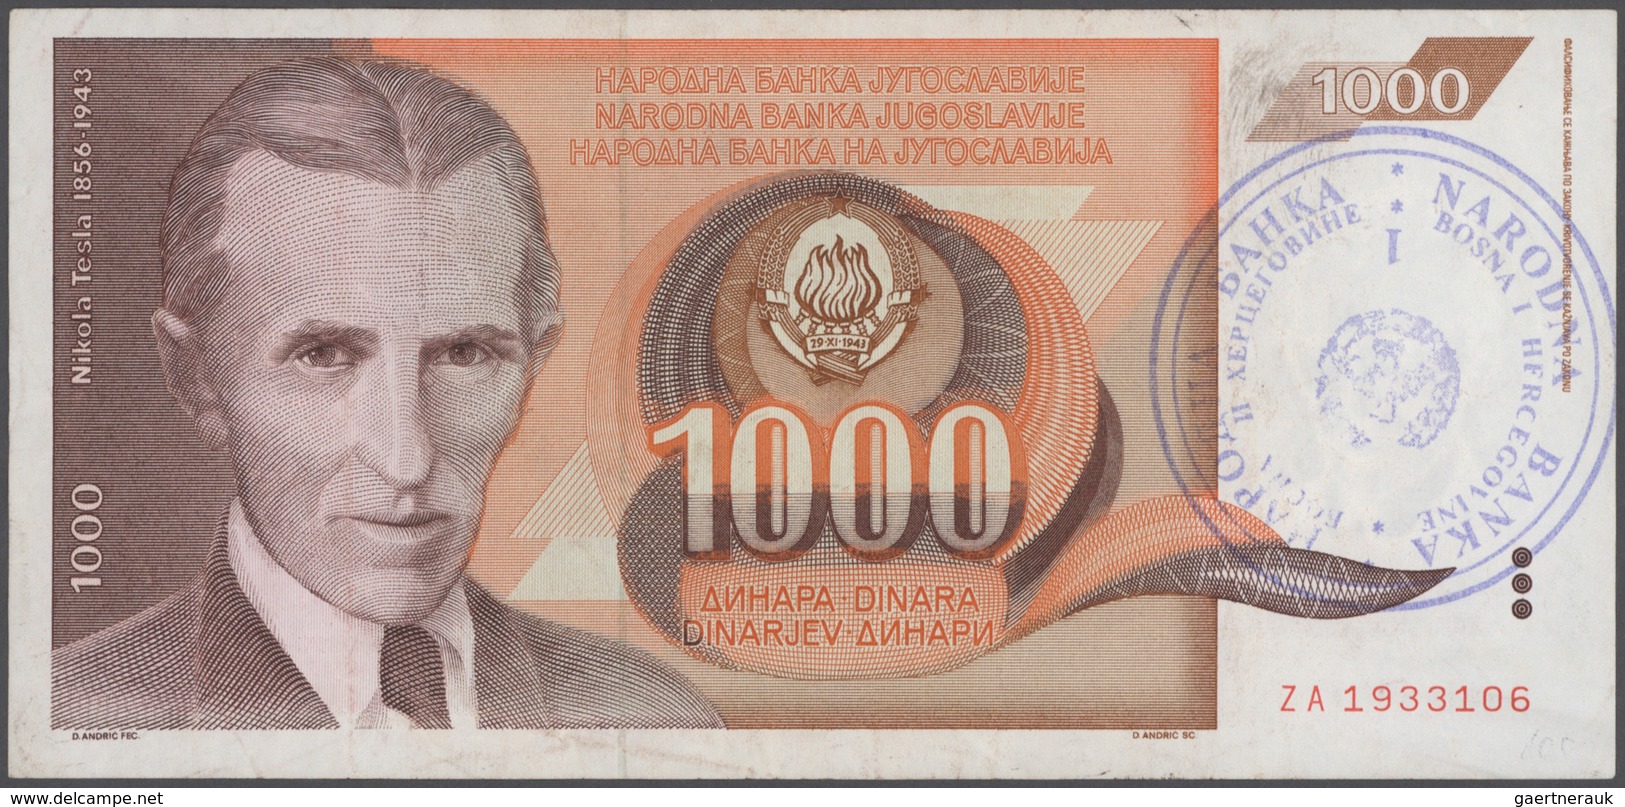 Alle Welt: Collectors album with more than 100 banknotes Azerbaijan, Belarus, Bosnia, Moldova, Kyrgy